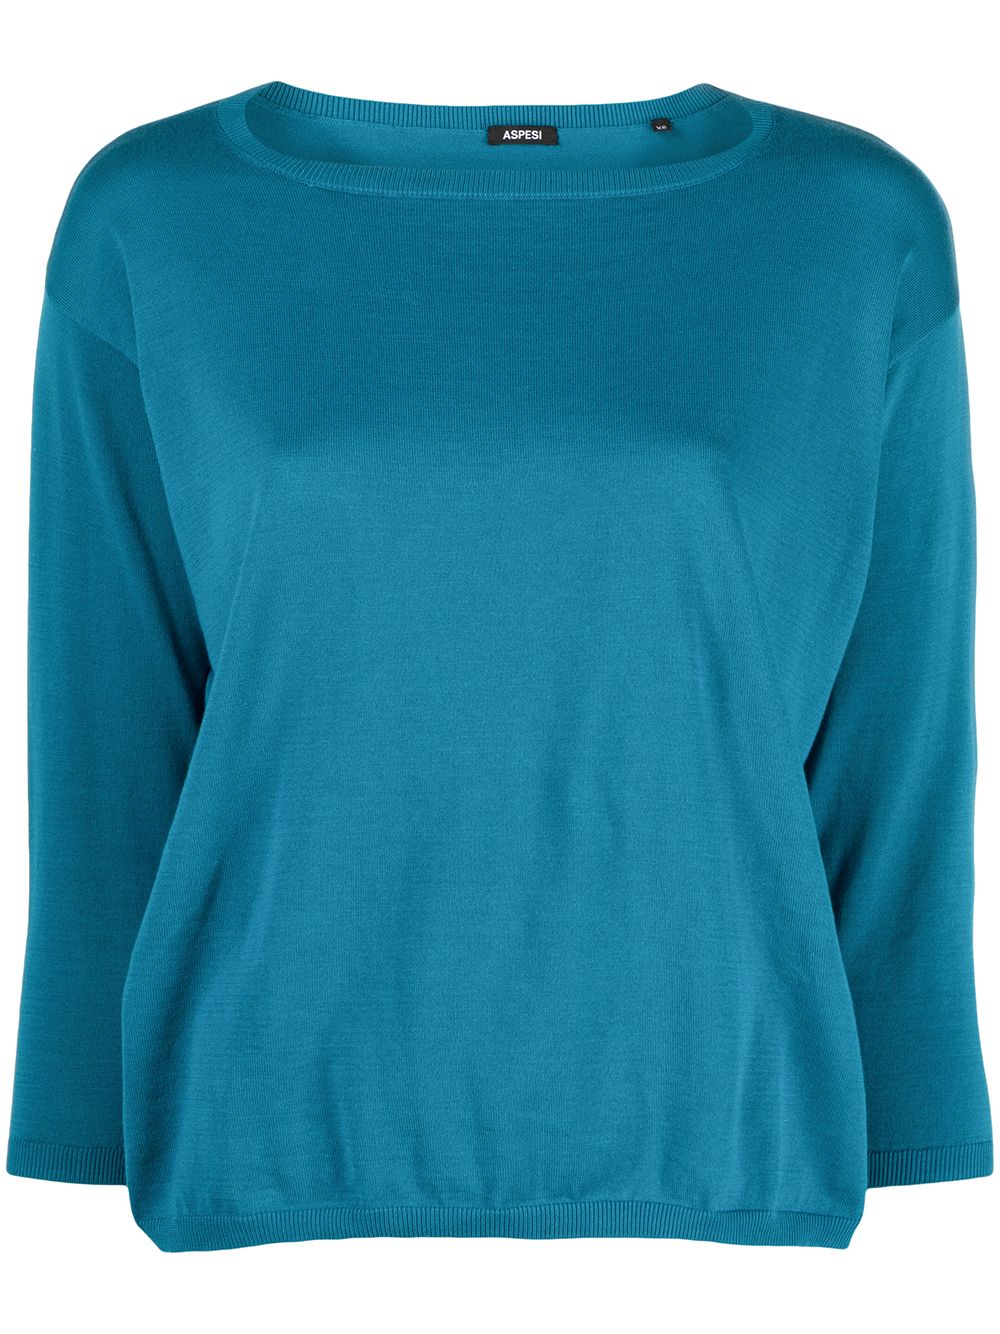 Aspesi Long-sleeved Cotton Jersey In Blue